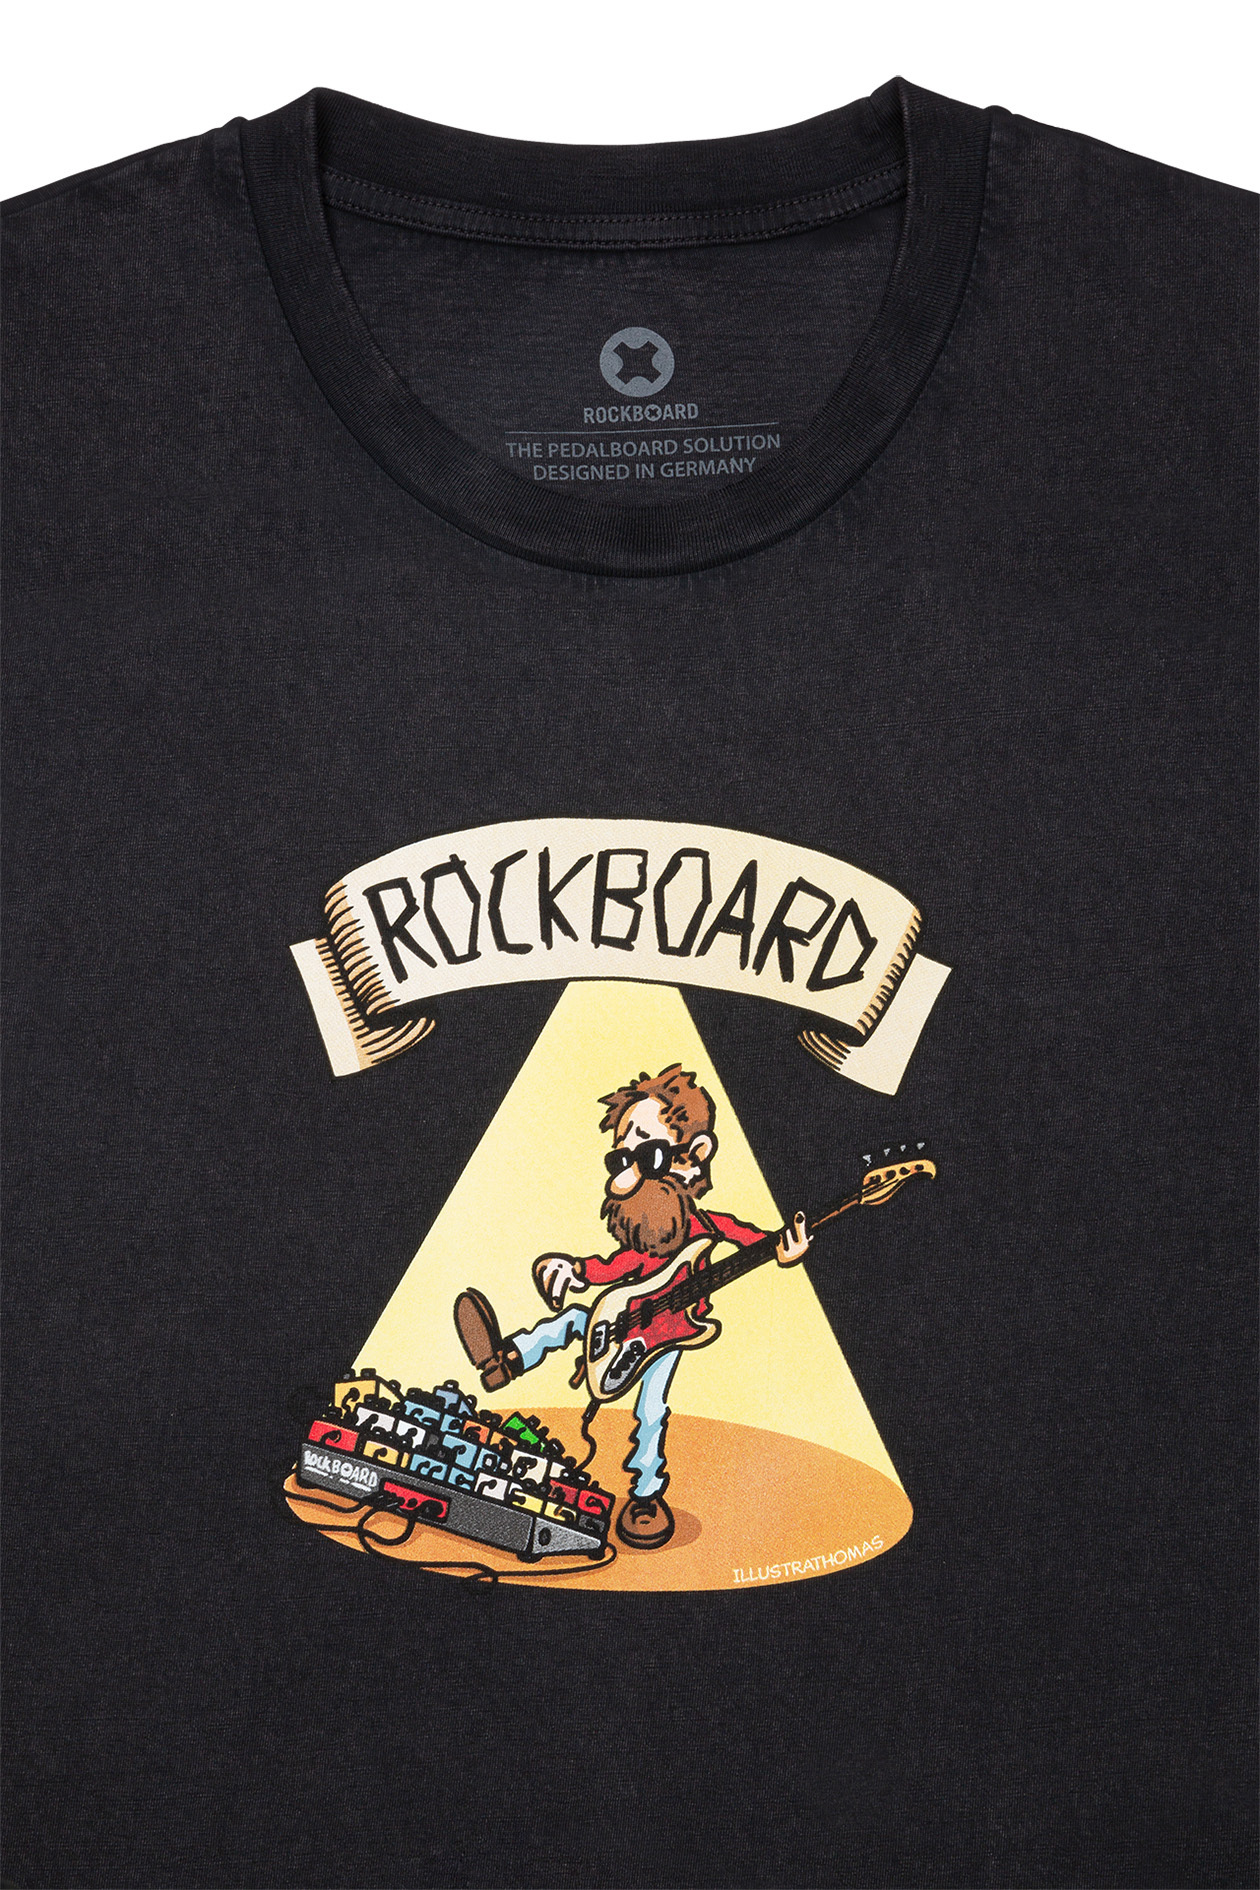 RockBoard - Black - Size L